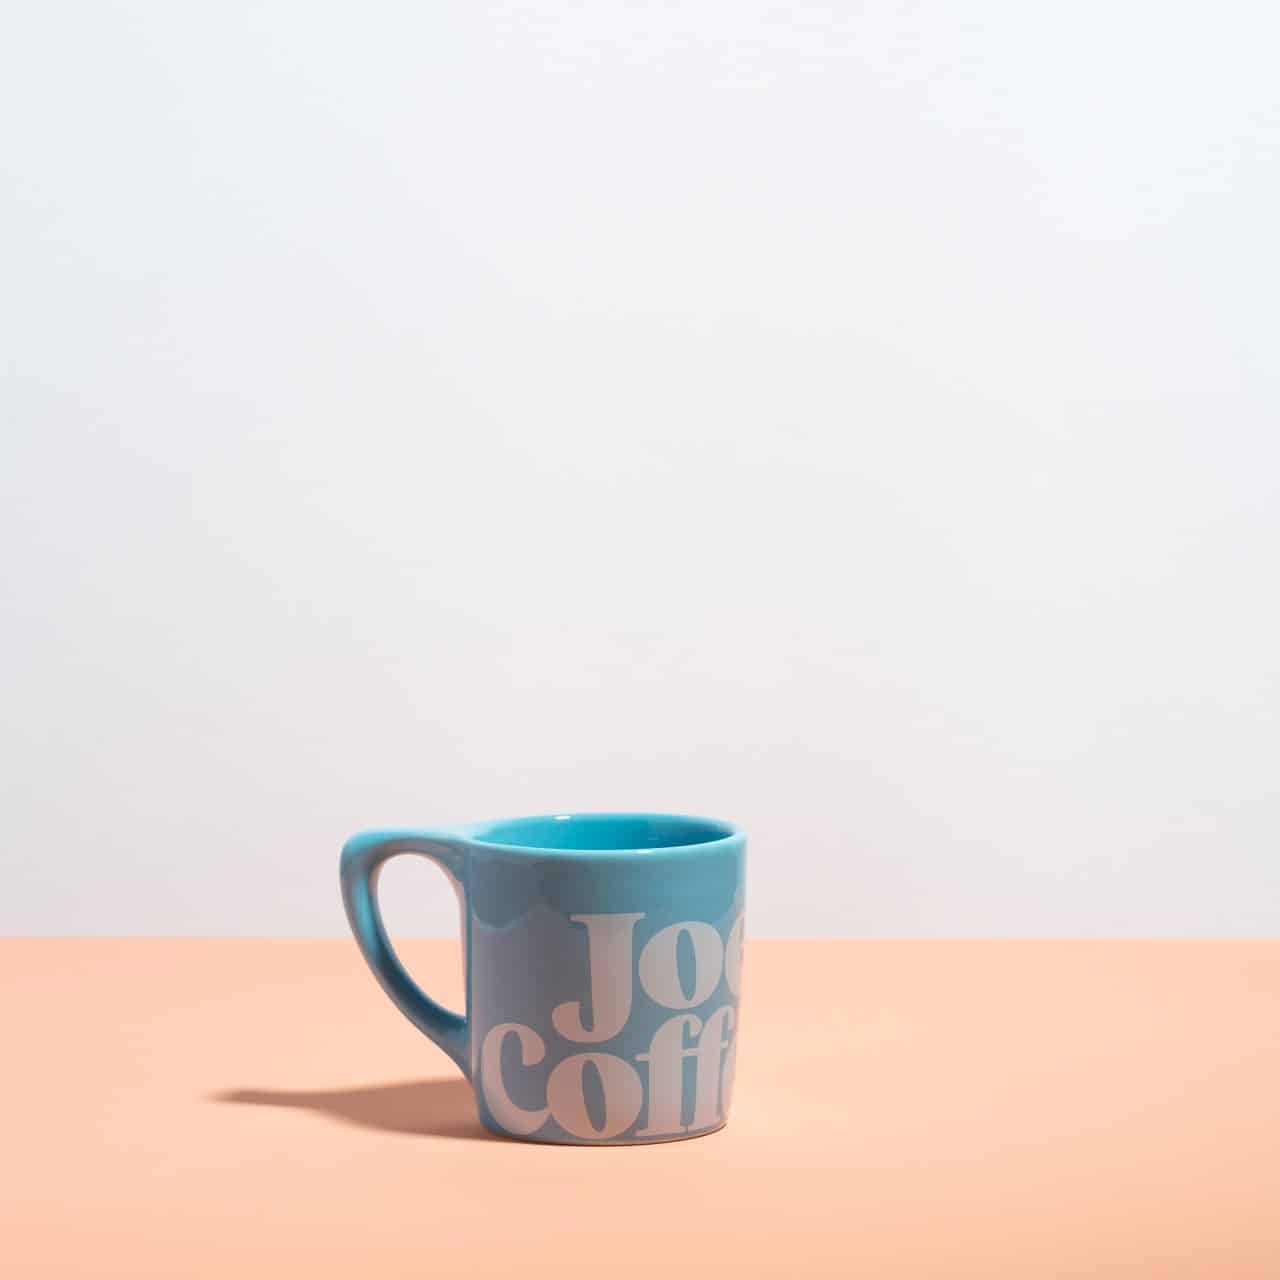 blue mug with "joe coffee" on it